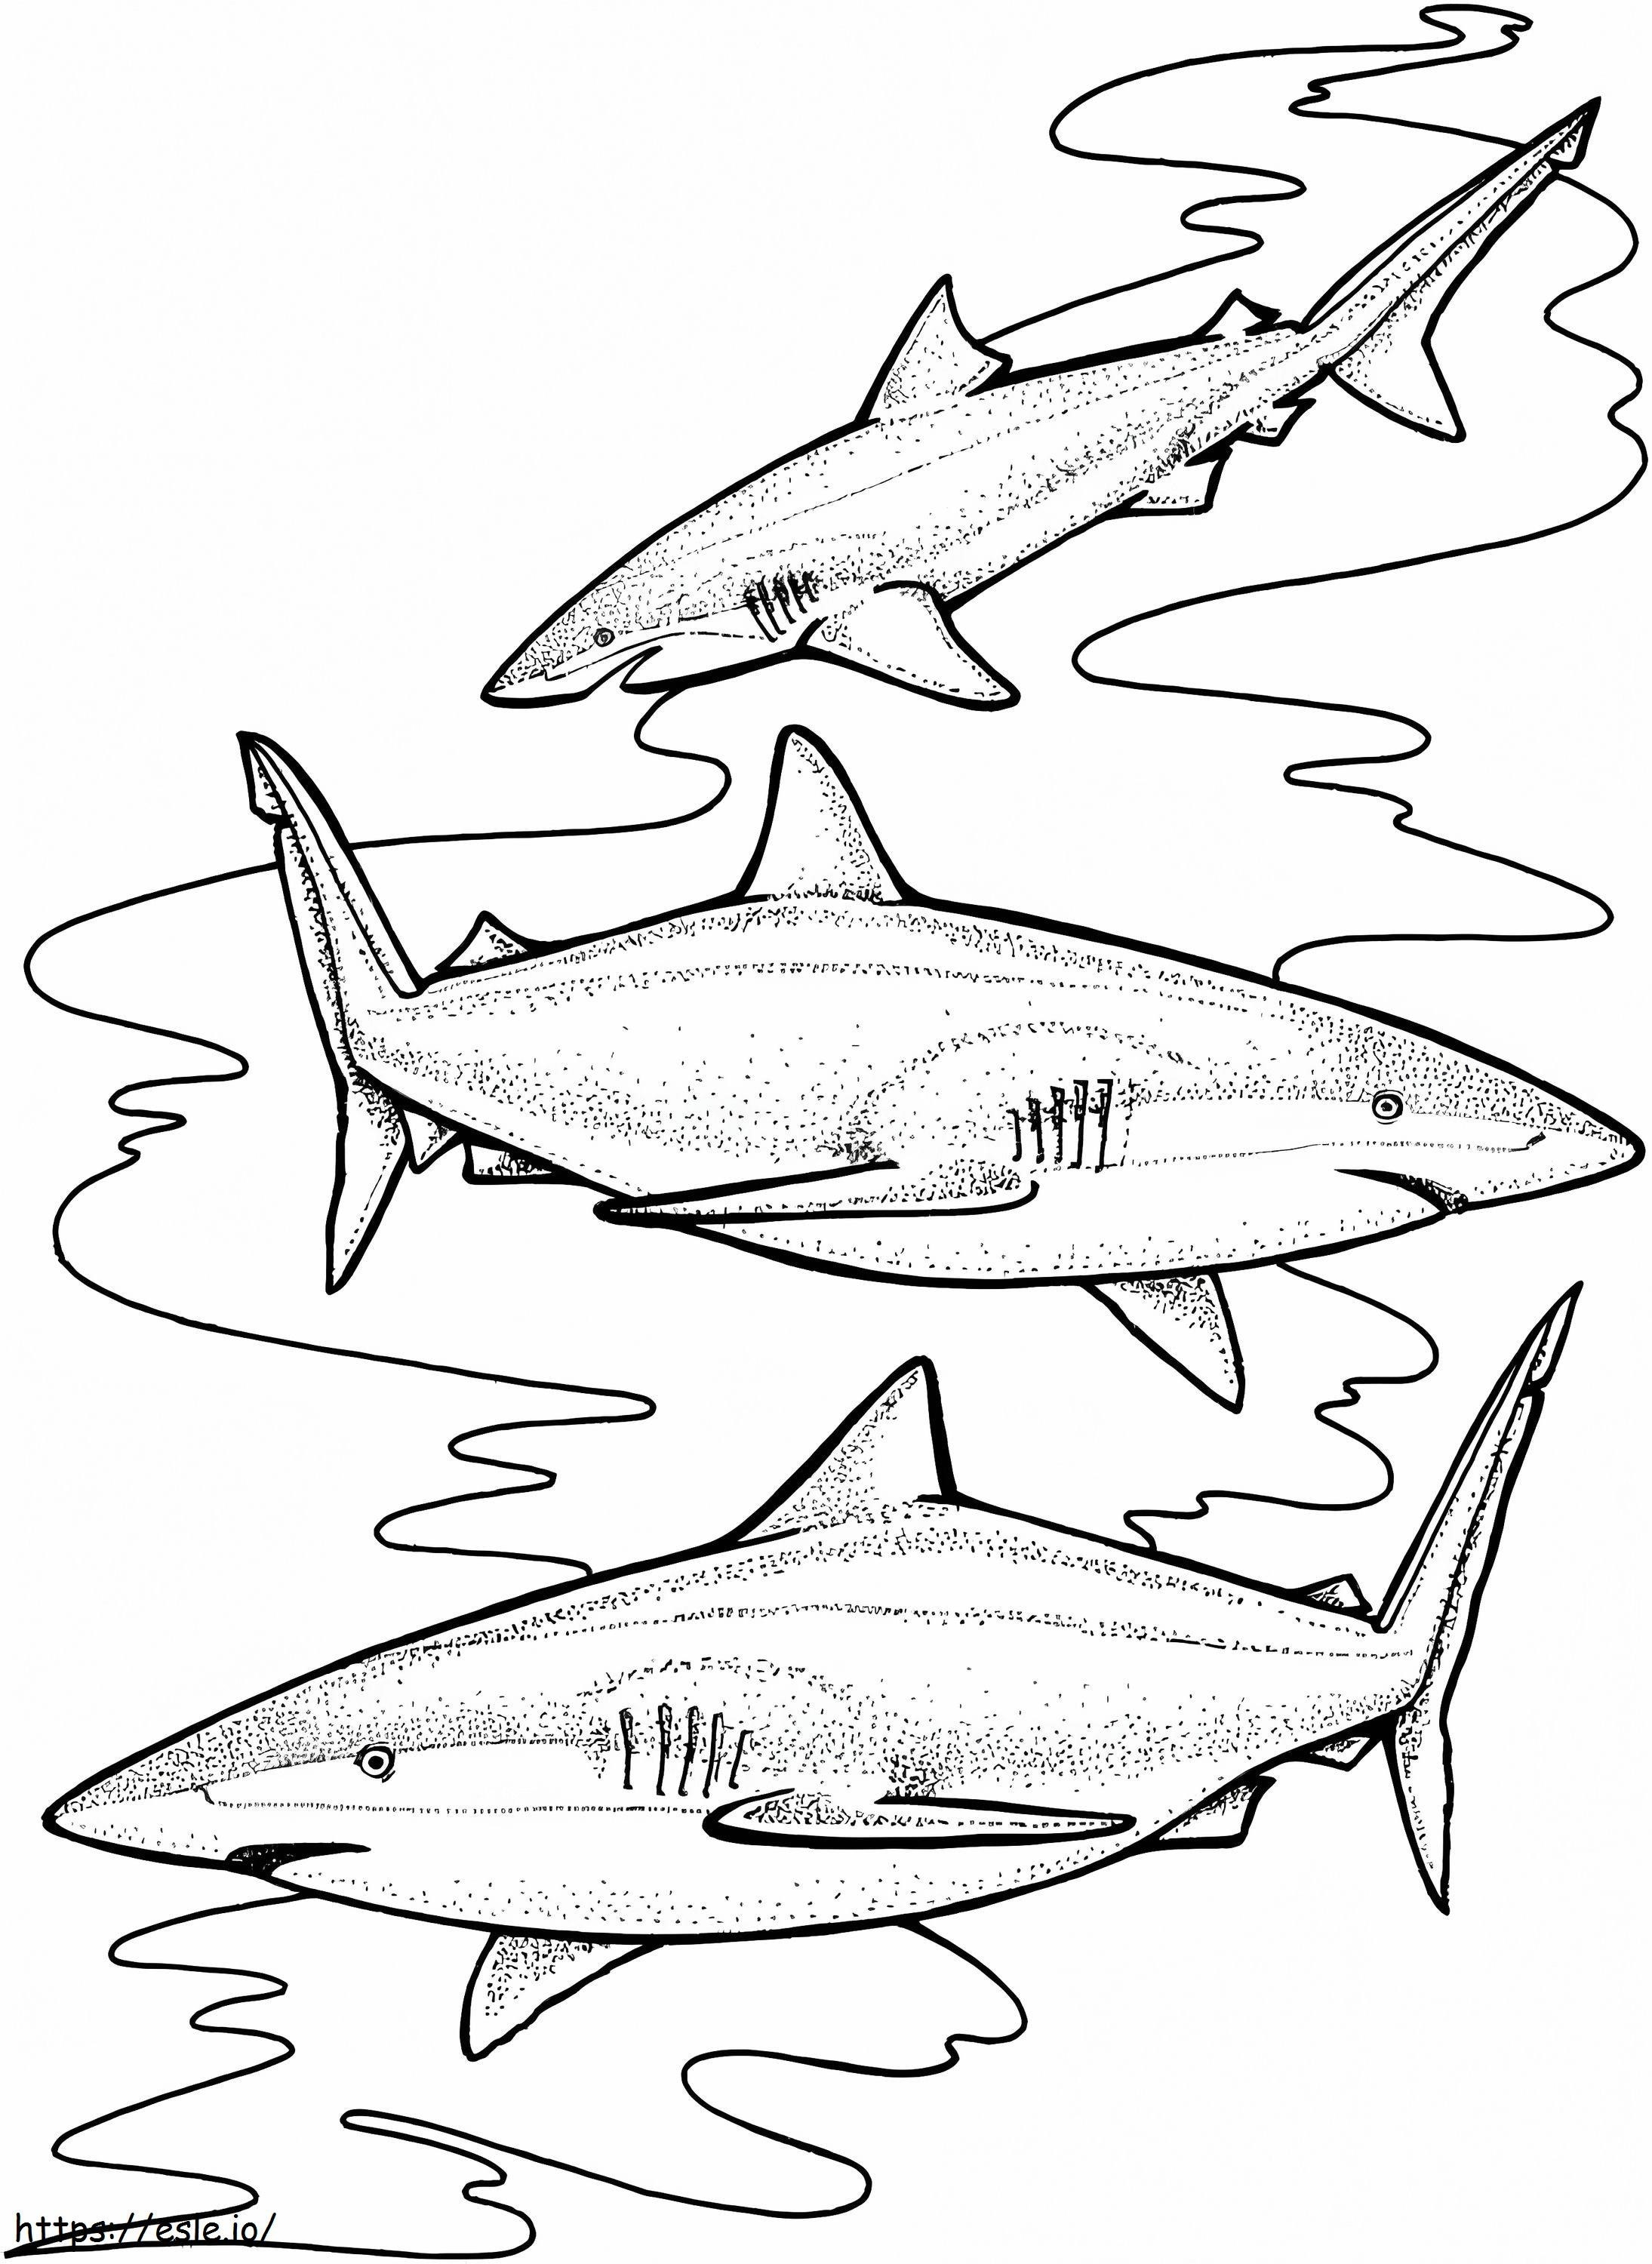 Three Tiger Sharks coloring page